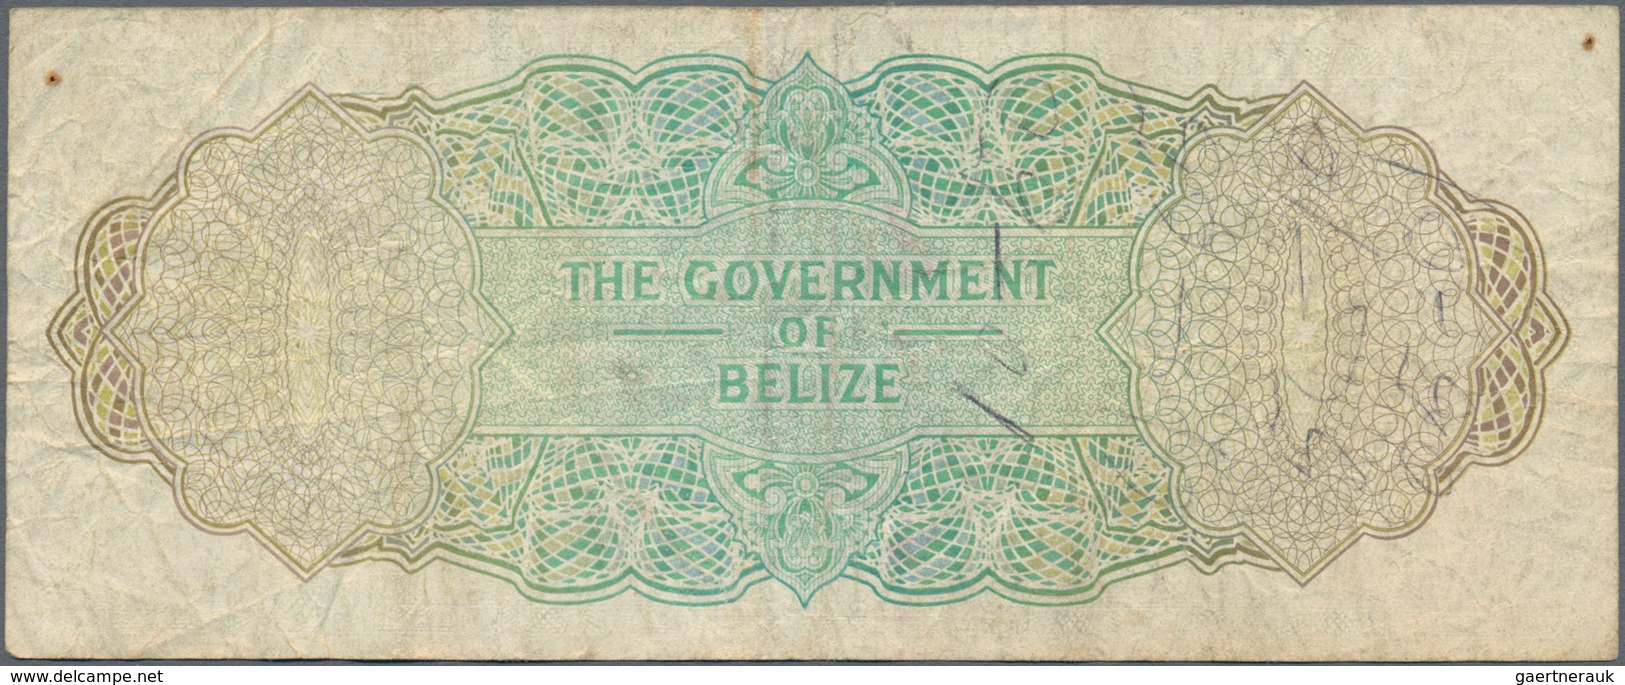 Belize: set of 4 notes containing 10 Dollars 1987, 20 Dollars 1980, 1 Dollar 1976 & 2 Dollars 1975,